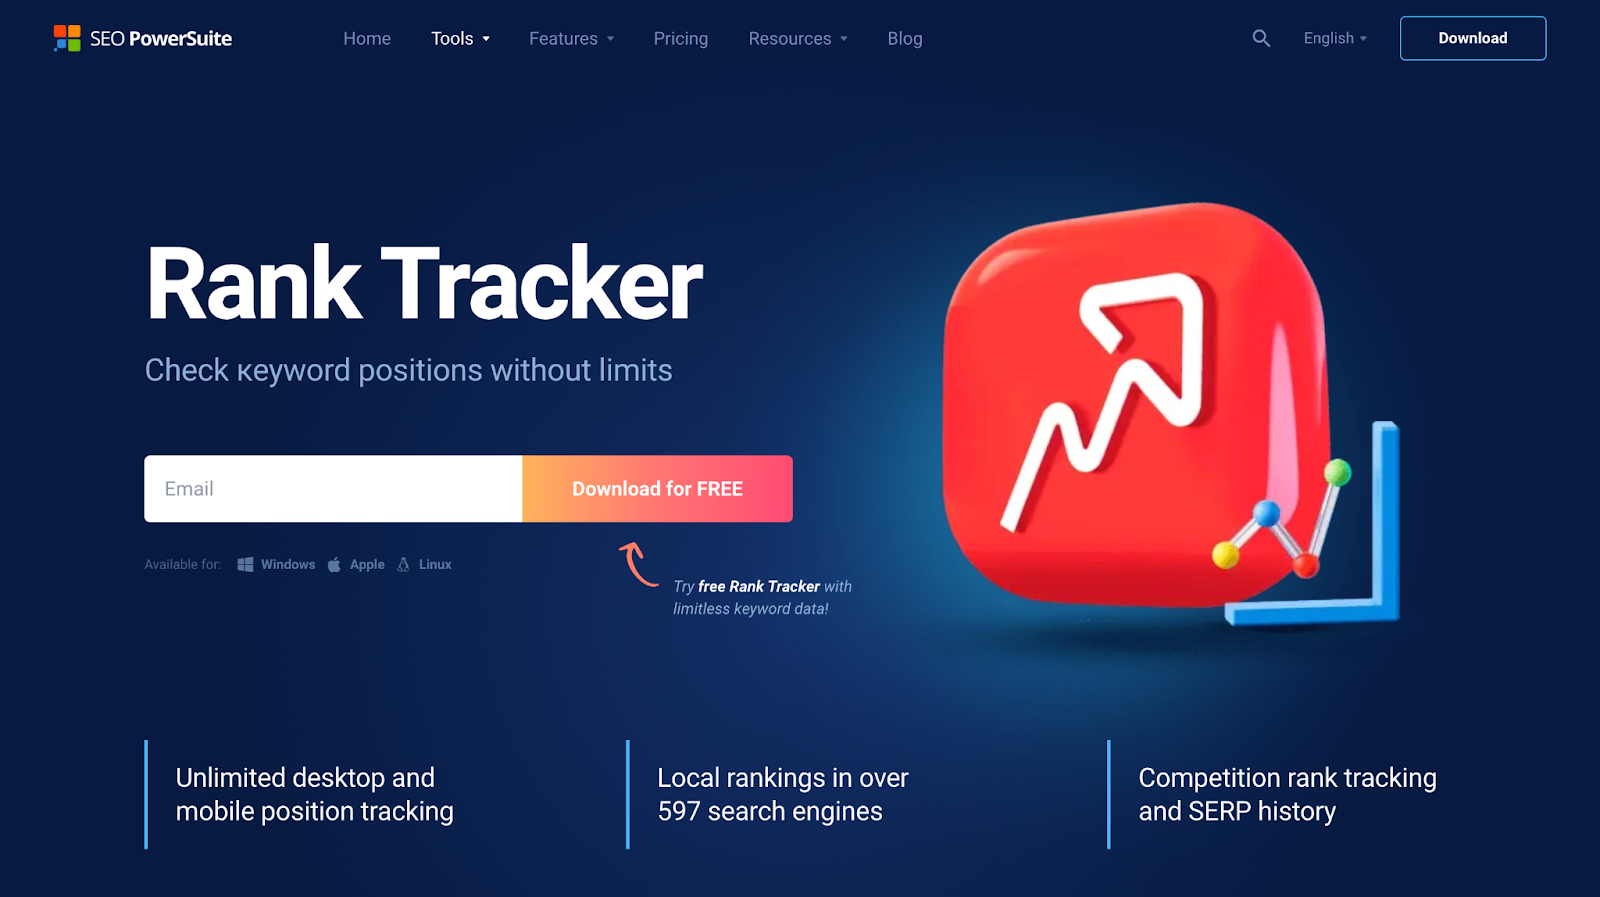 SEO PowerSuite Rank Tracker - Best Rank Tracker Tools